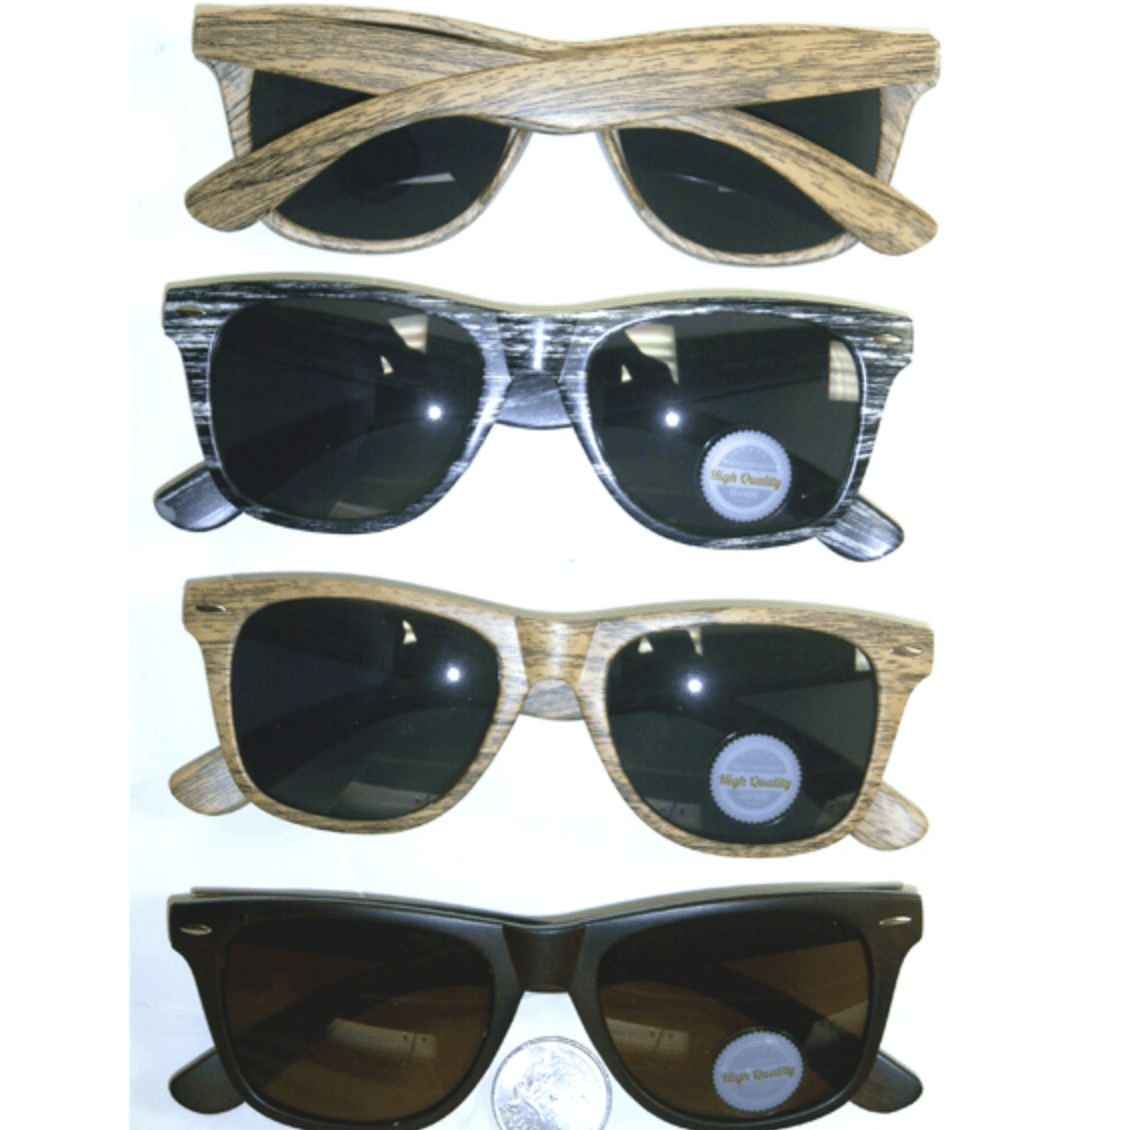 Wayfarer Style Wood Grain Looking Sunglasses